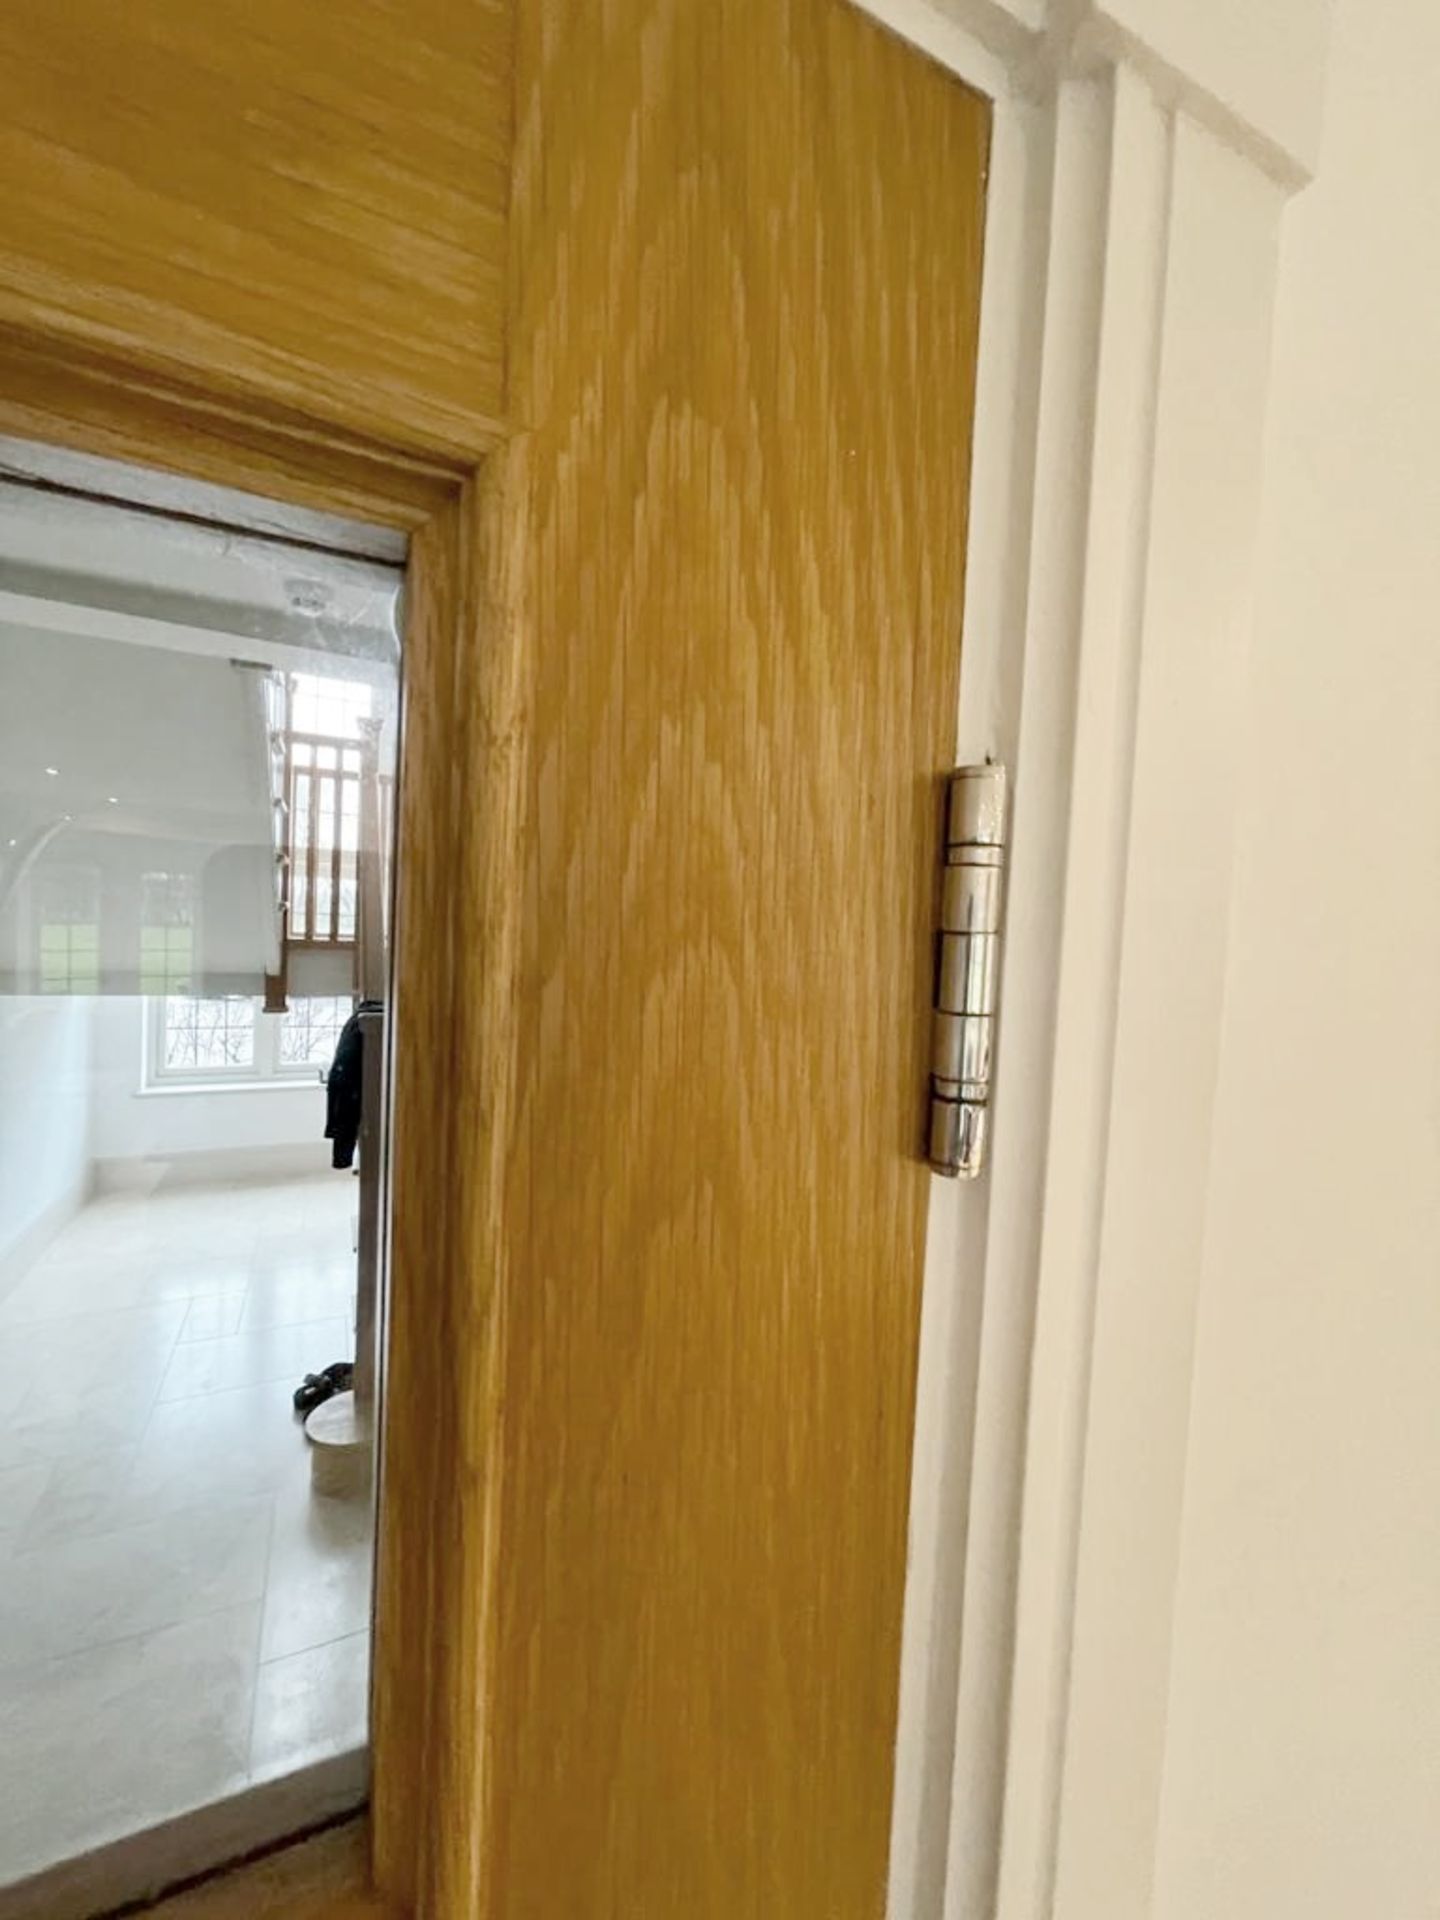 1 x Set Of Solid Oak Wood Glazed Internal Double Doors - Includes Hinges and Handles - NO VAT - Image 4 of 6